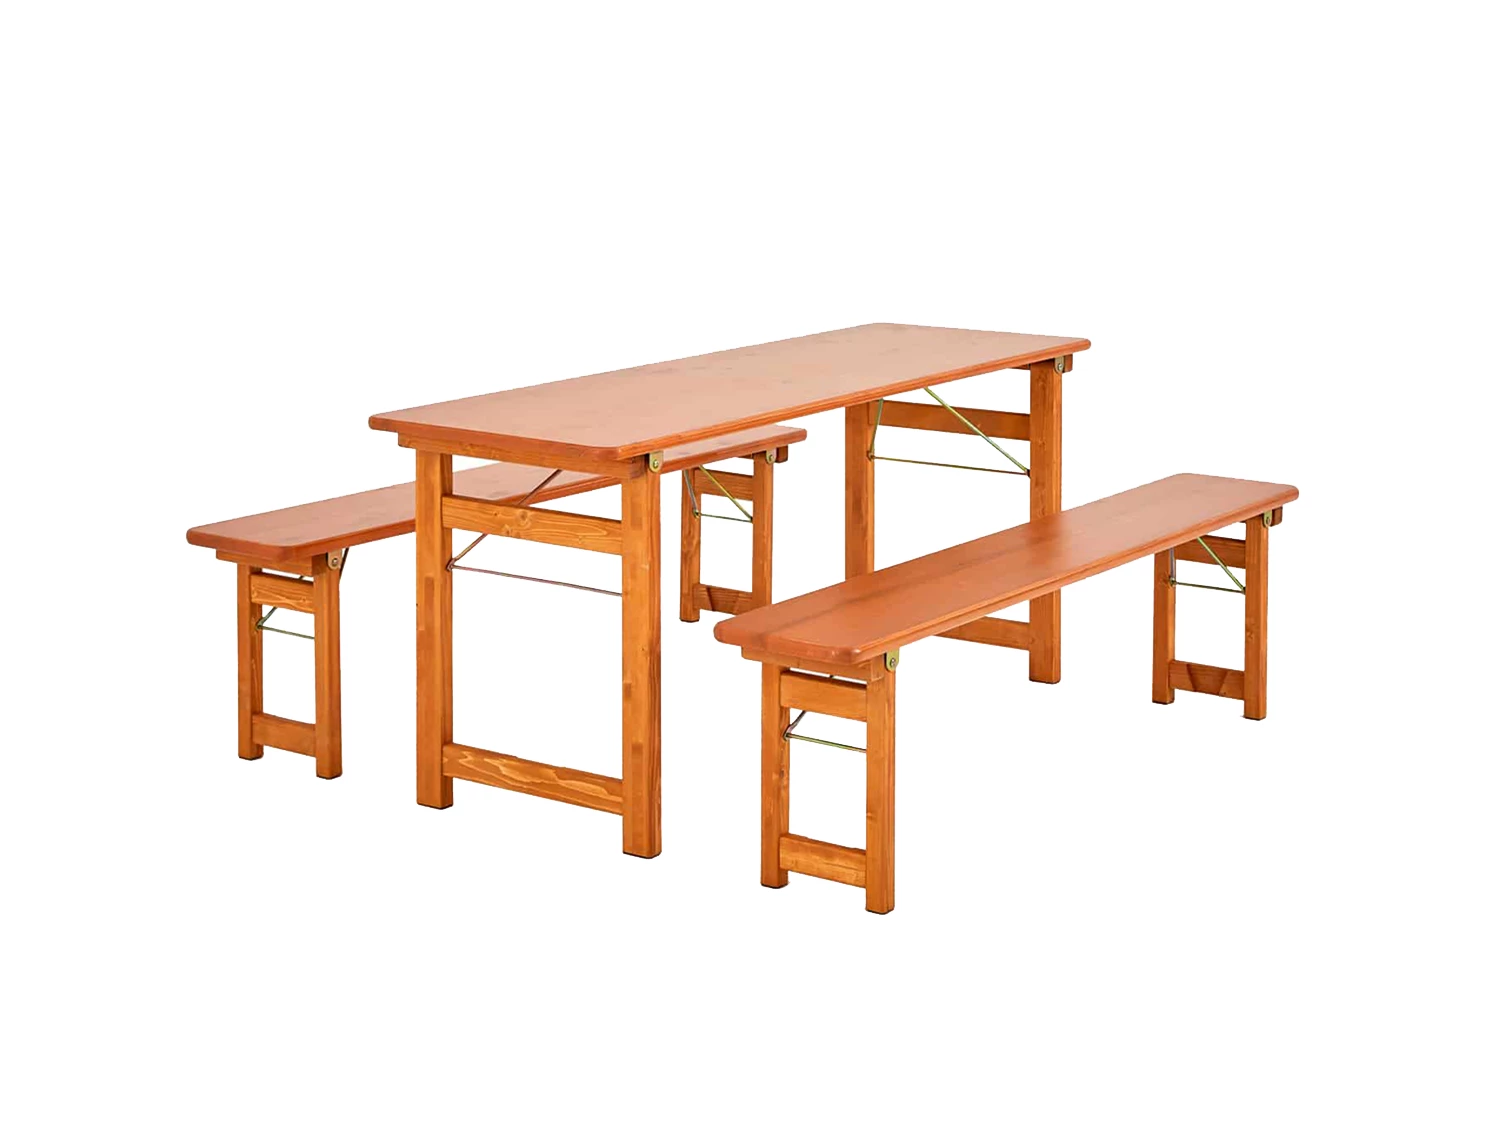 The Rustica | Rustic Table Set